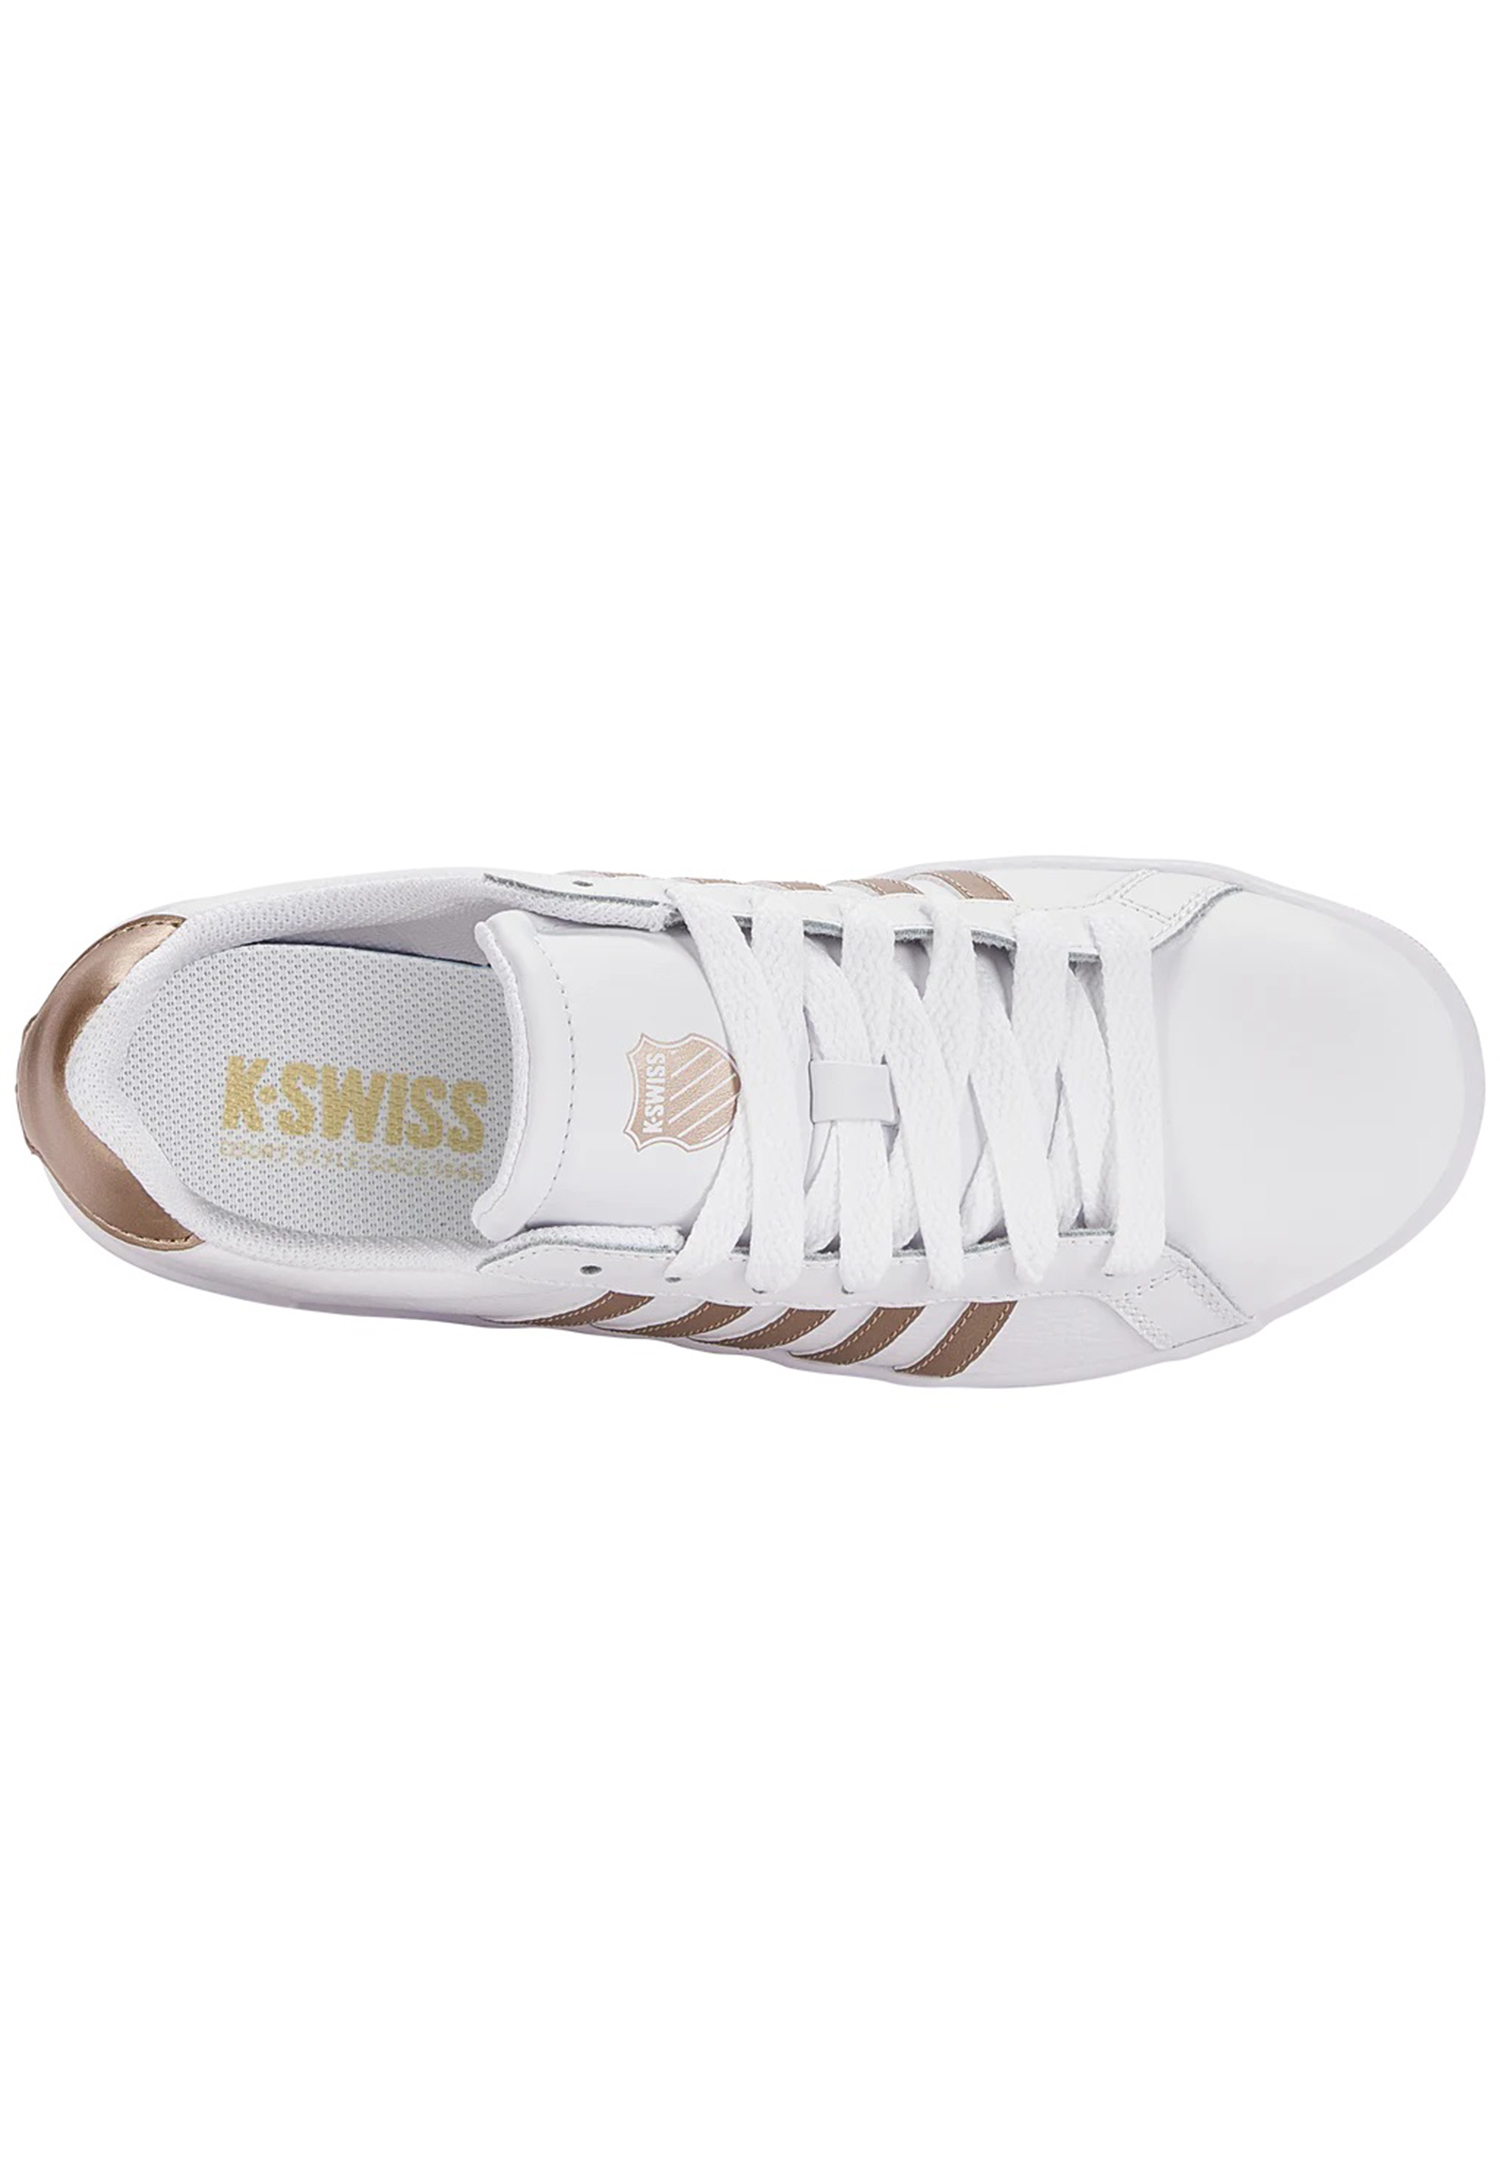 K-SWISS Court Tiebreak Damen Sneaker 97011-194-M weiss gold